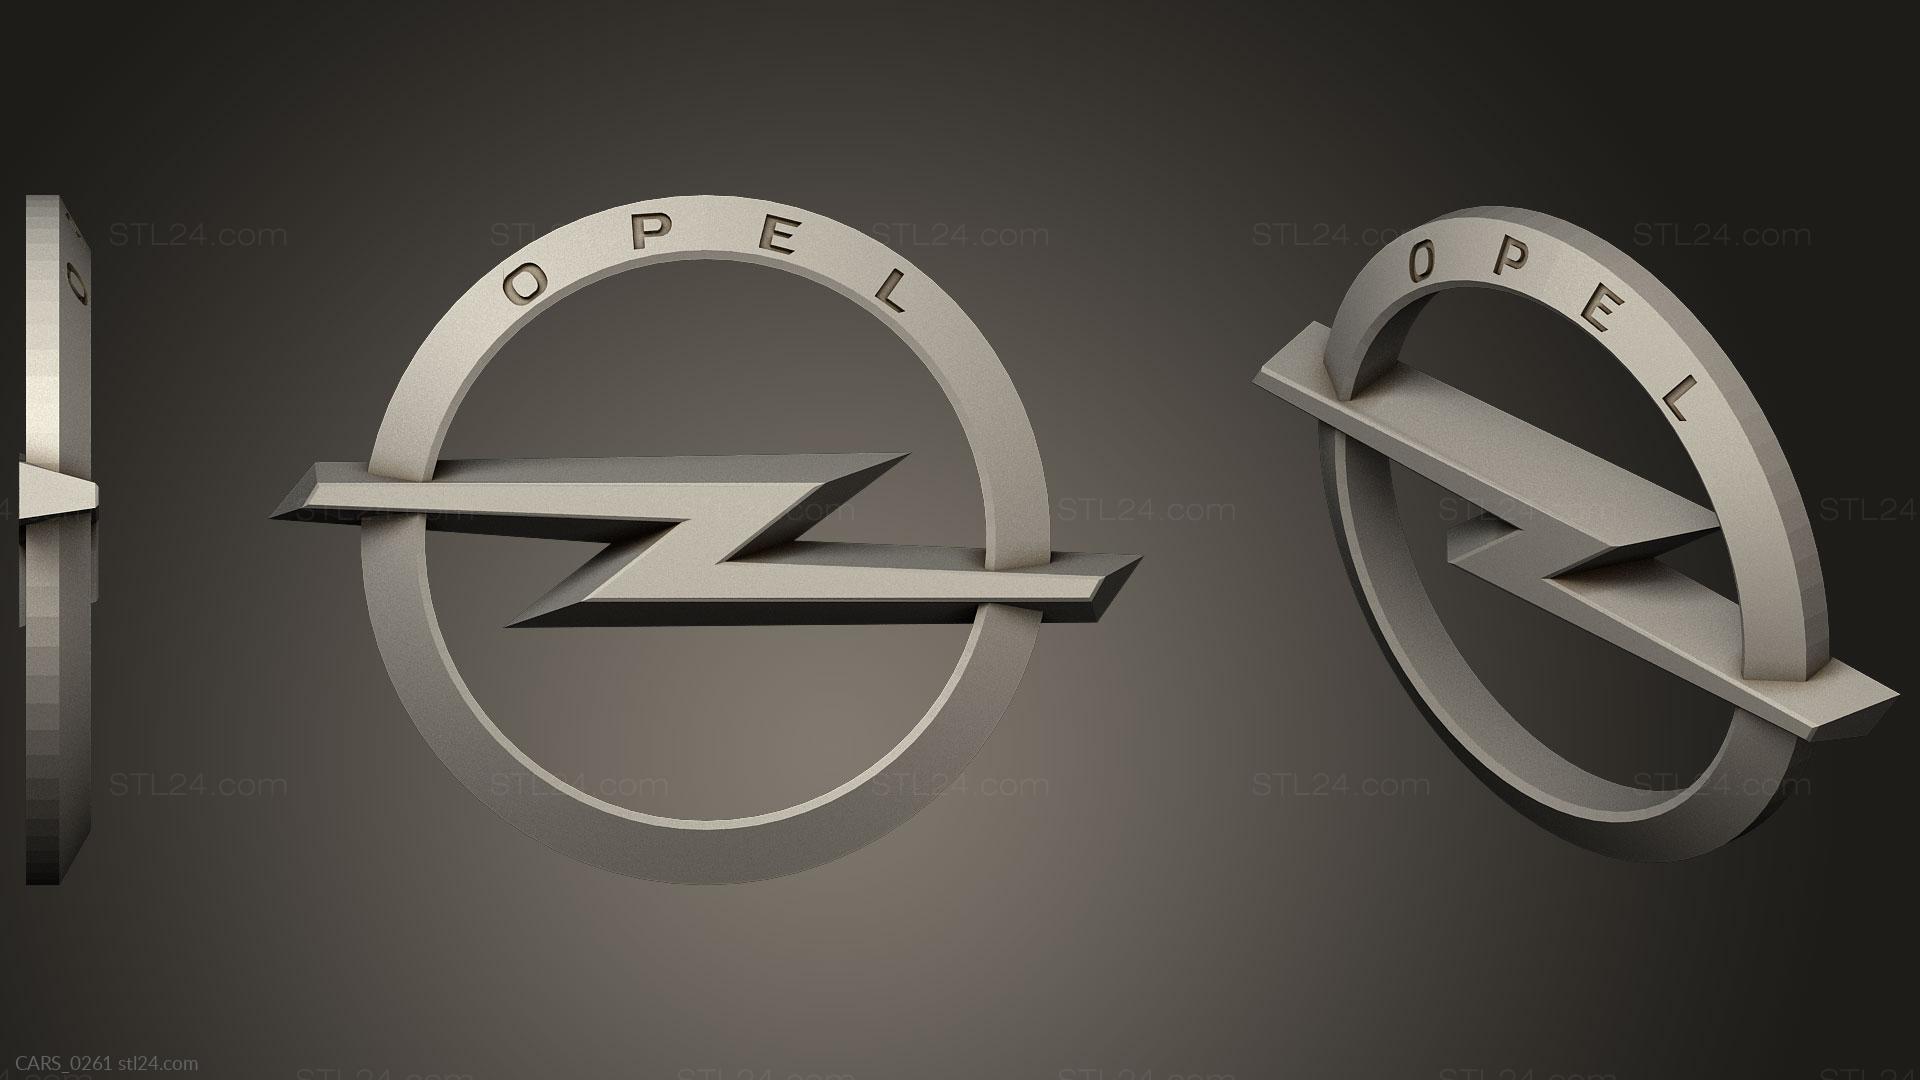 https://img.stl24.com/images/cars/CARS_0261/black/full/CARS_0261[Opel-Car-Logo].jpg